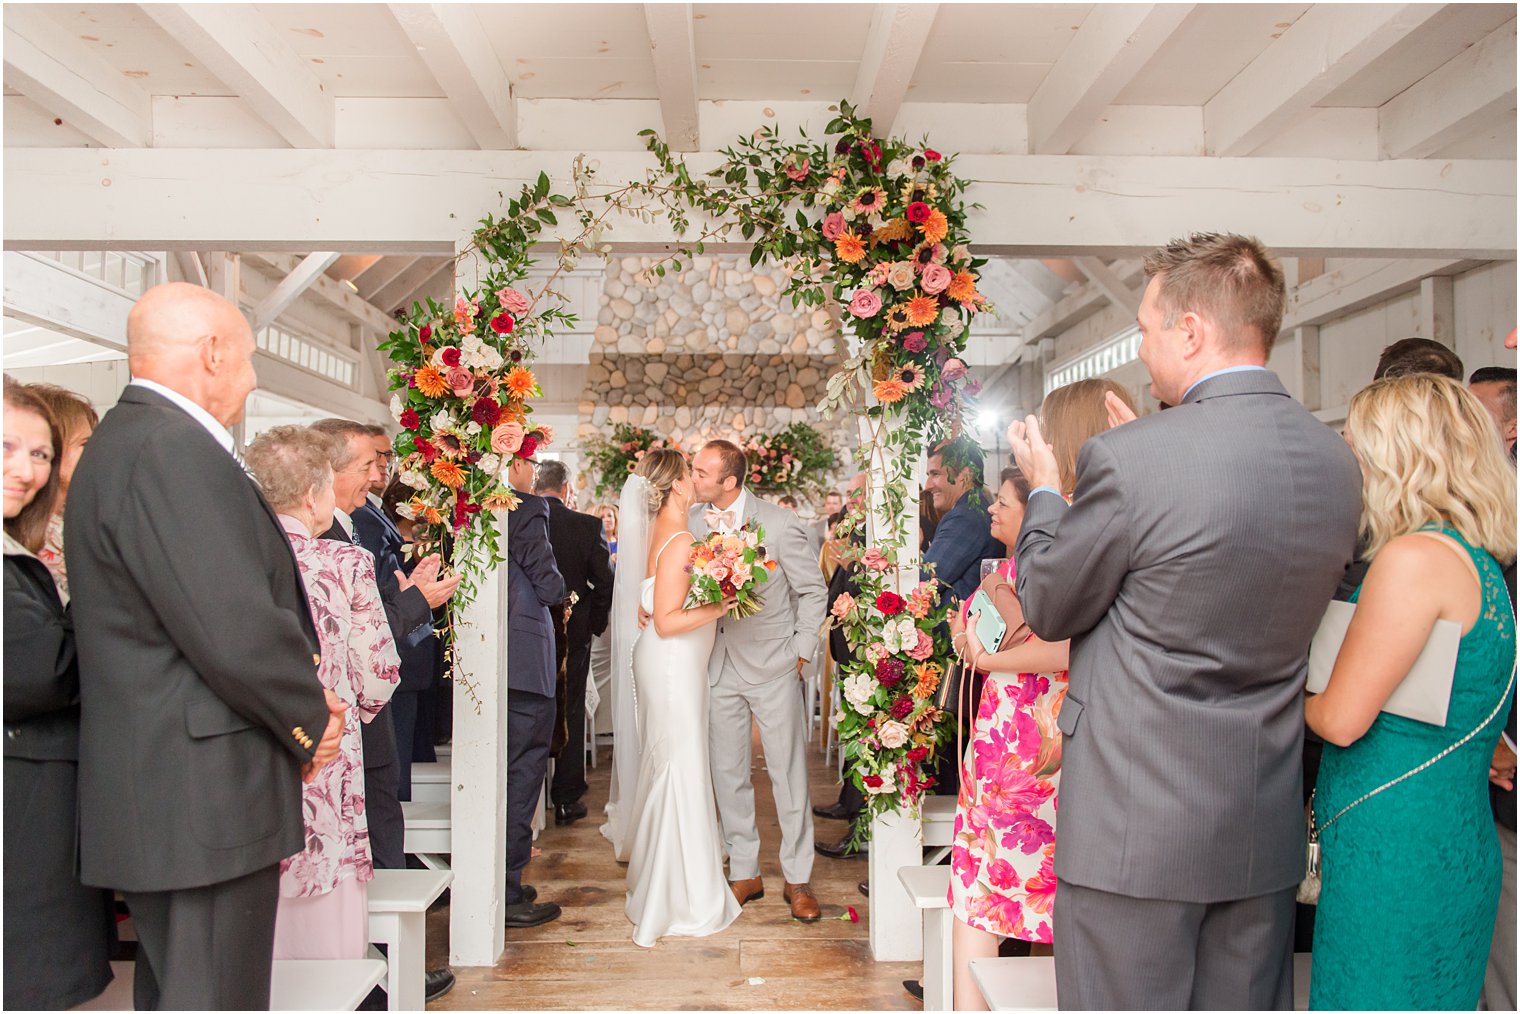 newlyweds kiss under floral arbor after ceremony in Bonnet Island Estate barn